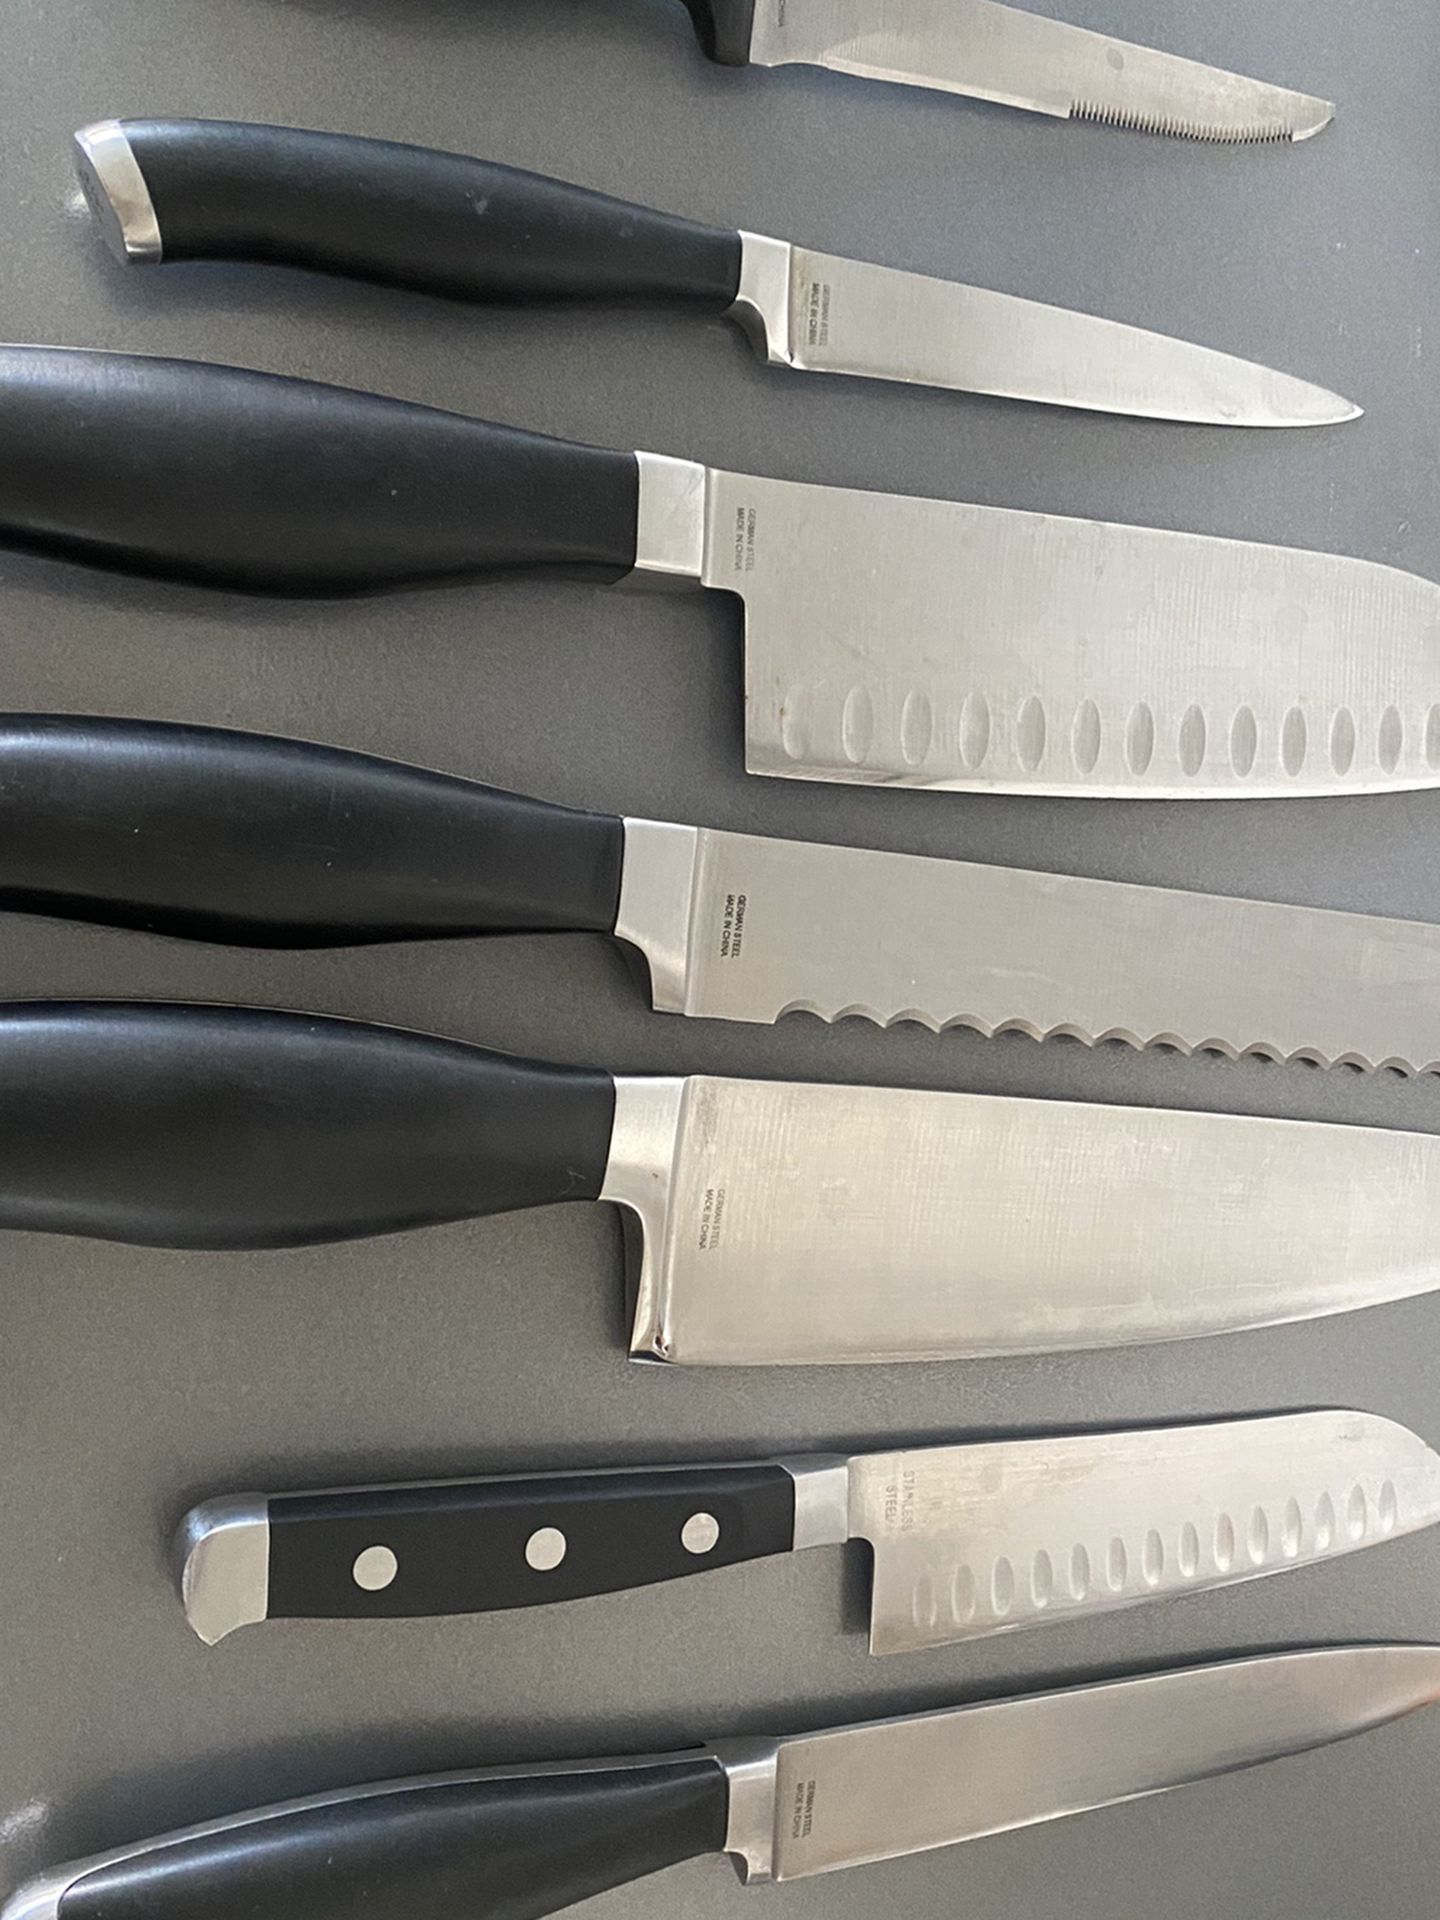 Calphalon Knife Block And Knives